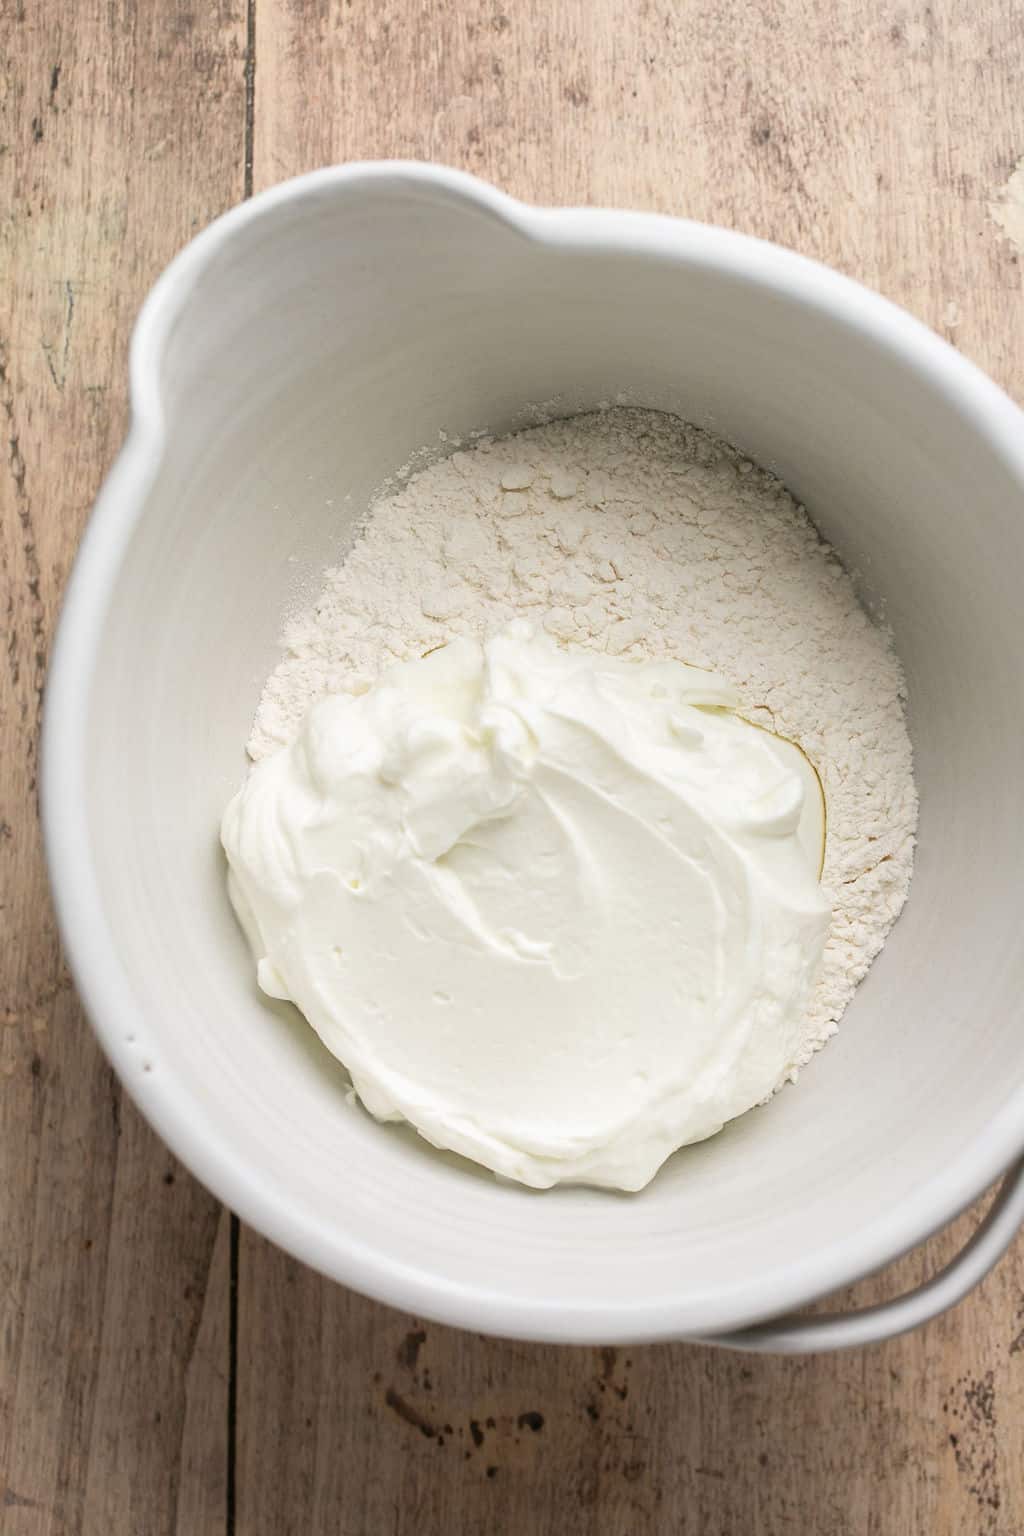 Flour and yogurt in a white bowl.